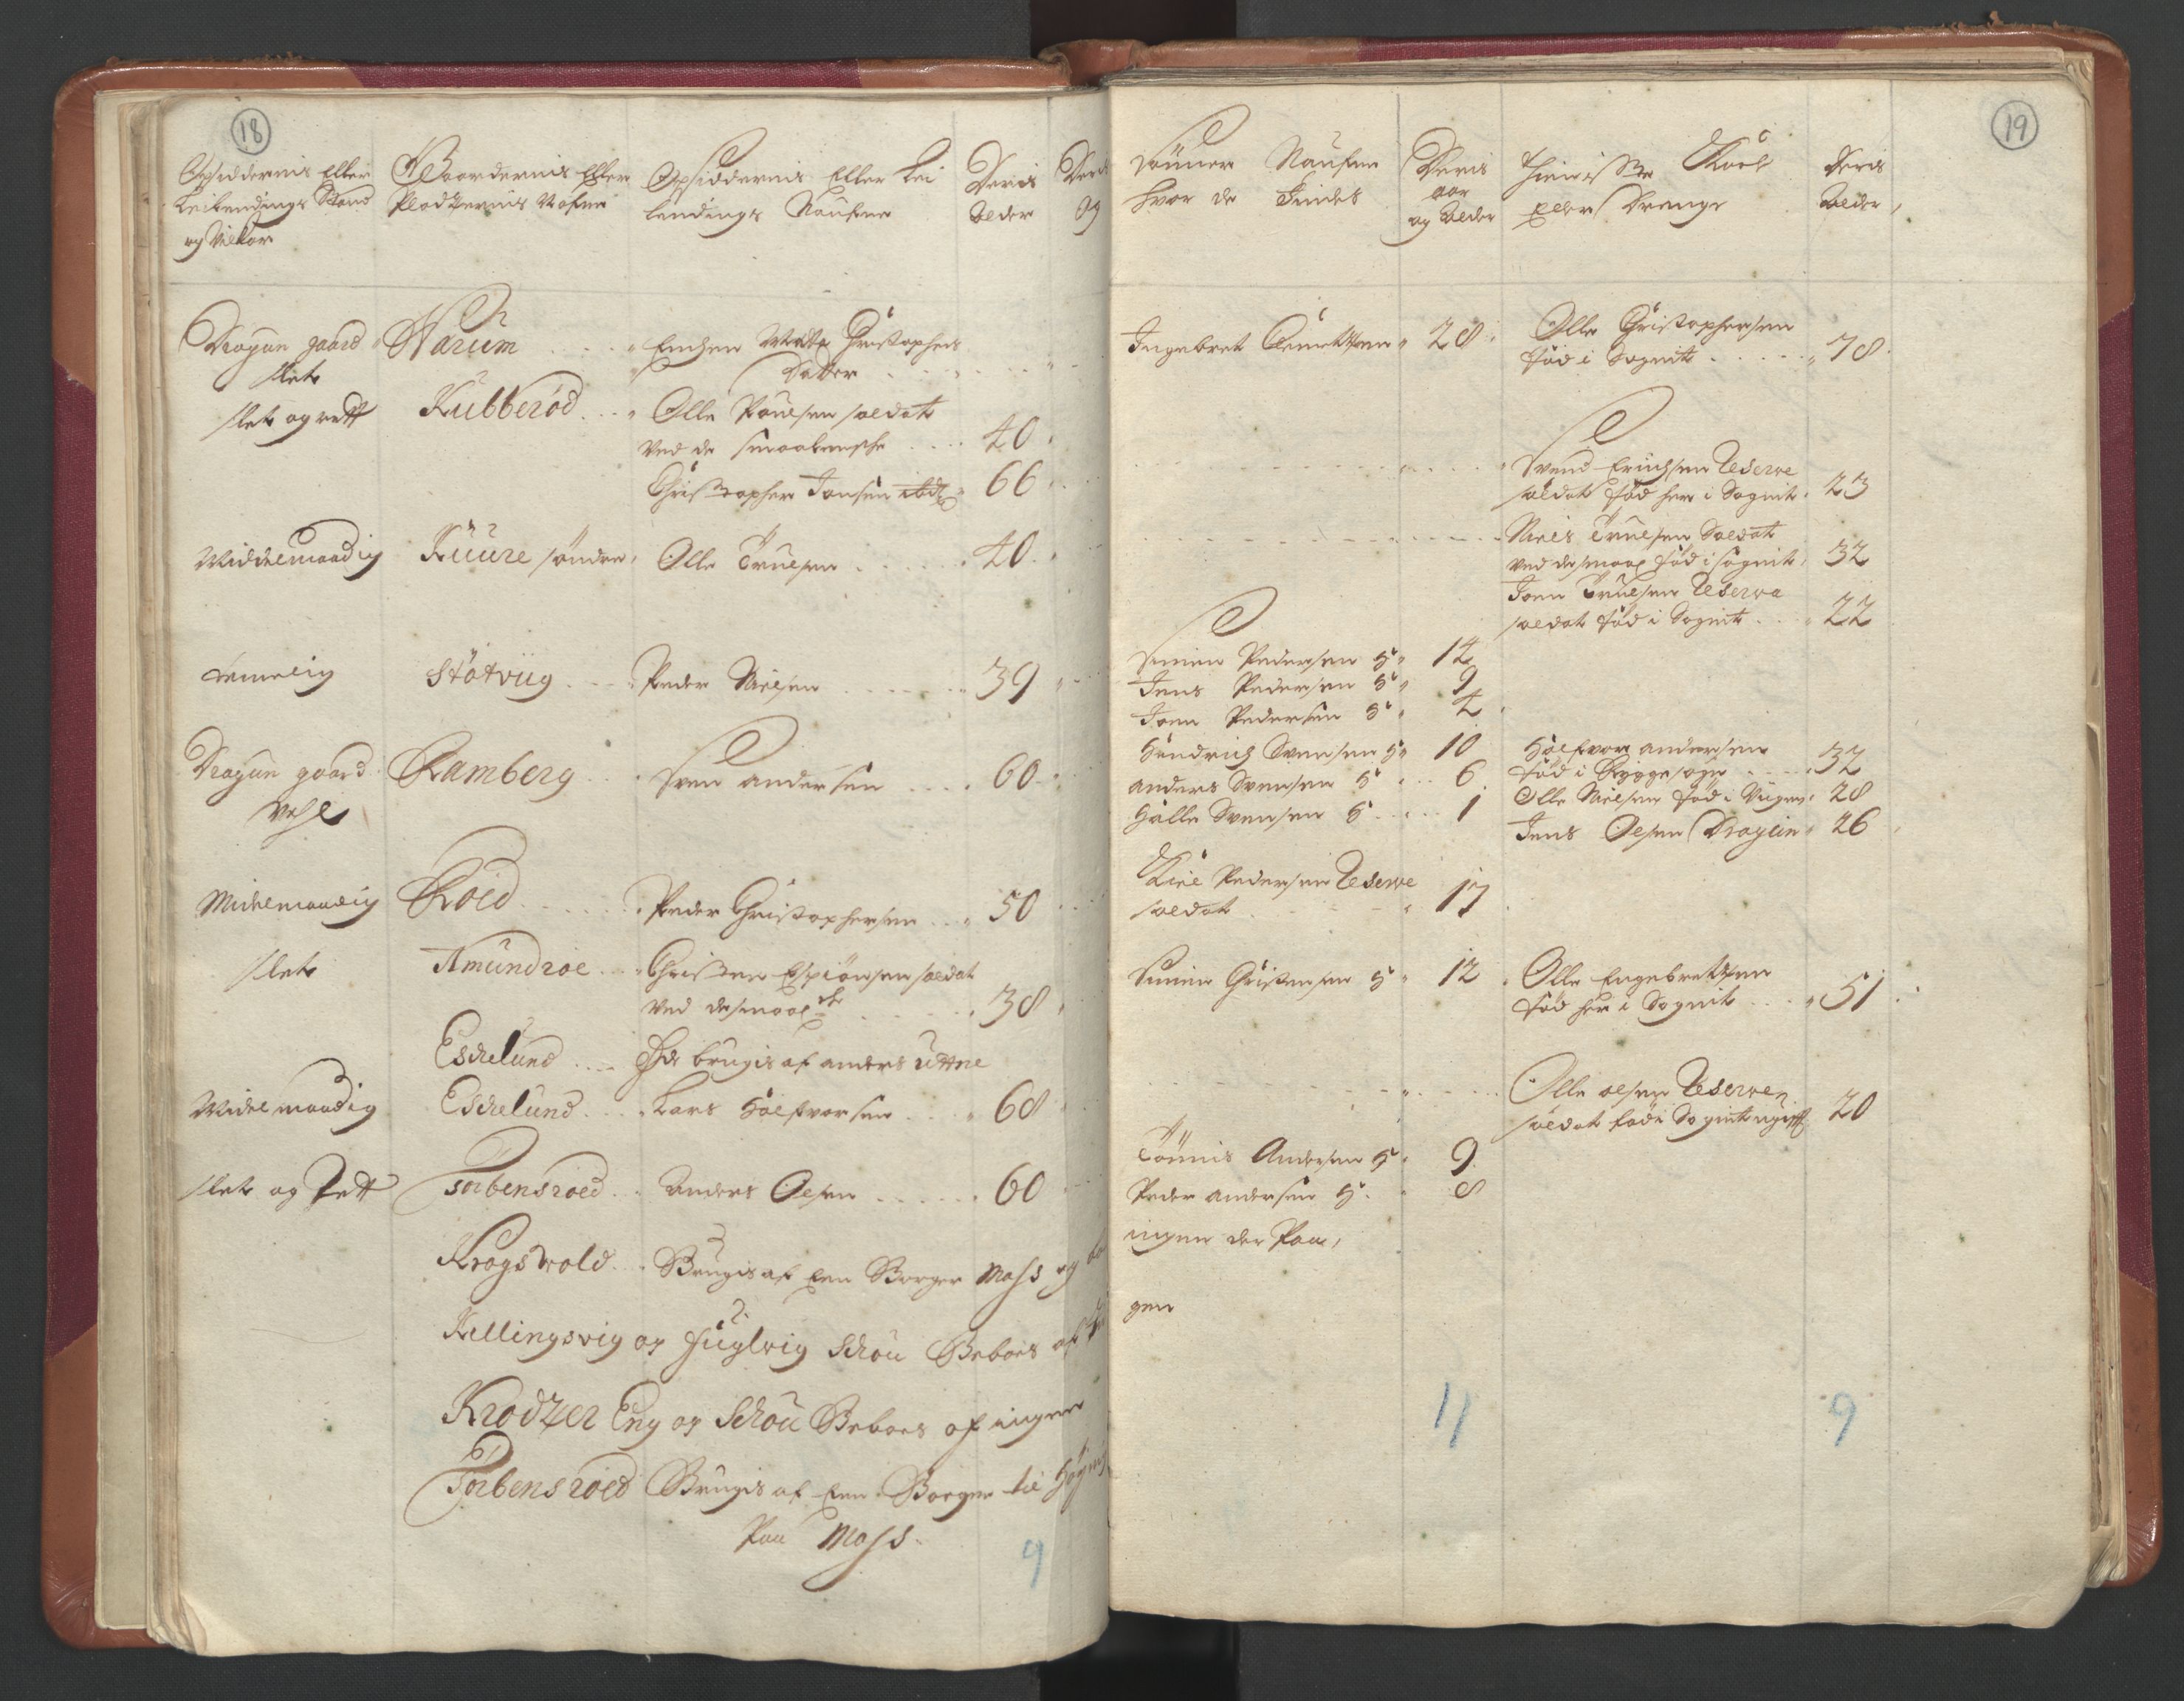 RA, Census (manntall) 1701, no. 1: Moss, Onsøy, Tune og Veme fogderi and Nedre Romerike fogderi, 1701, p. 18-19